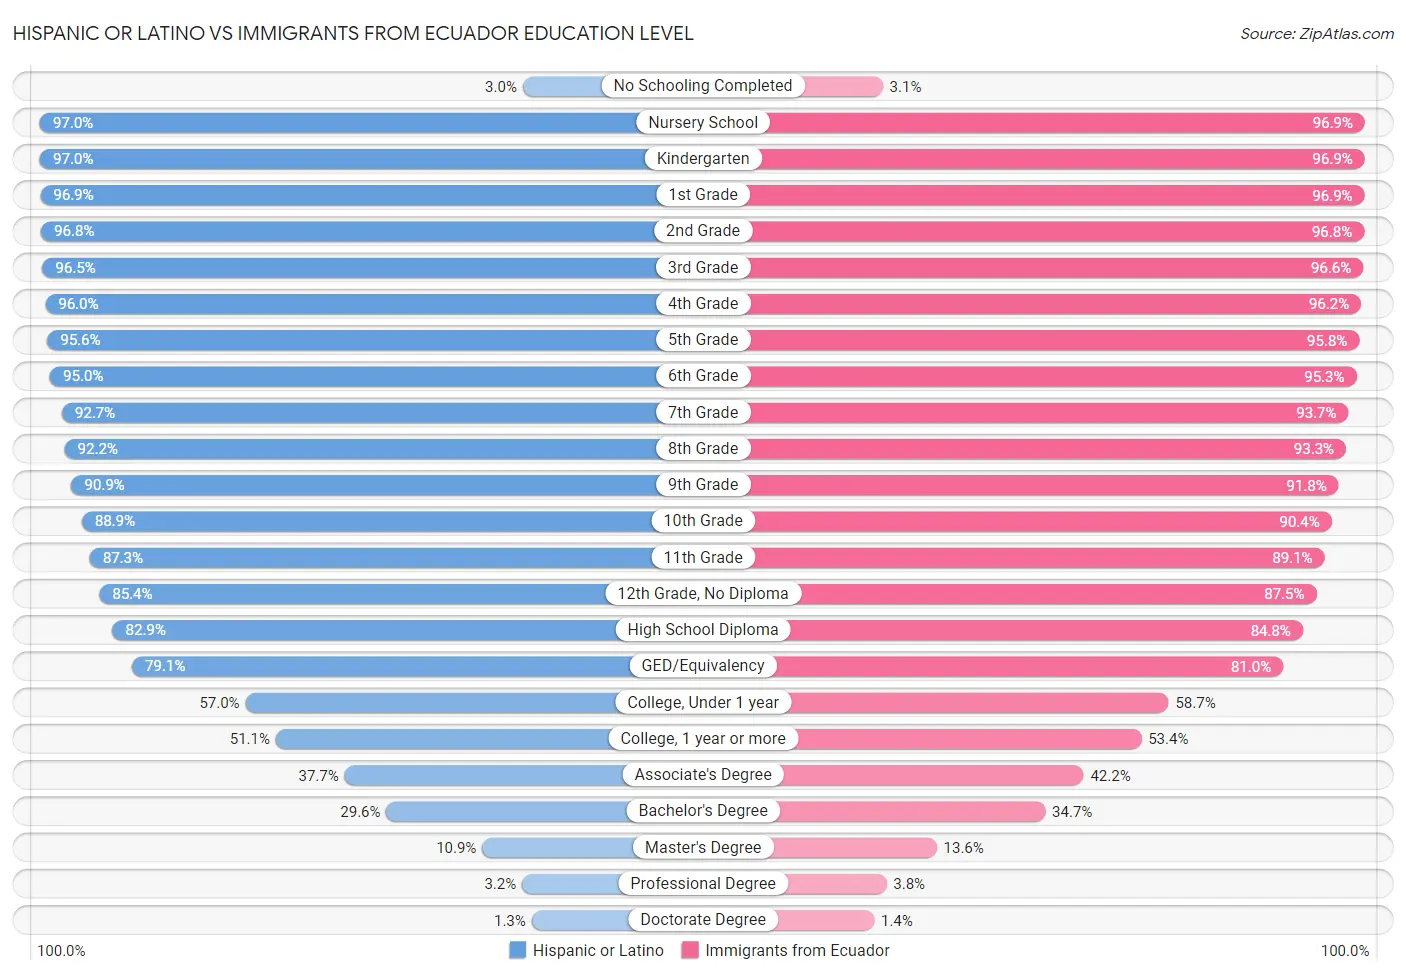 Hispanic or Latino vs Immigrants from Ecuador Education Level